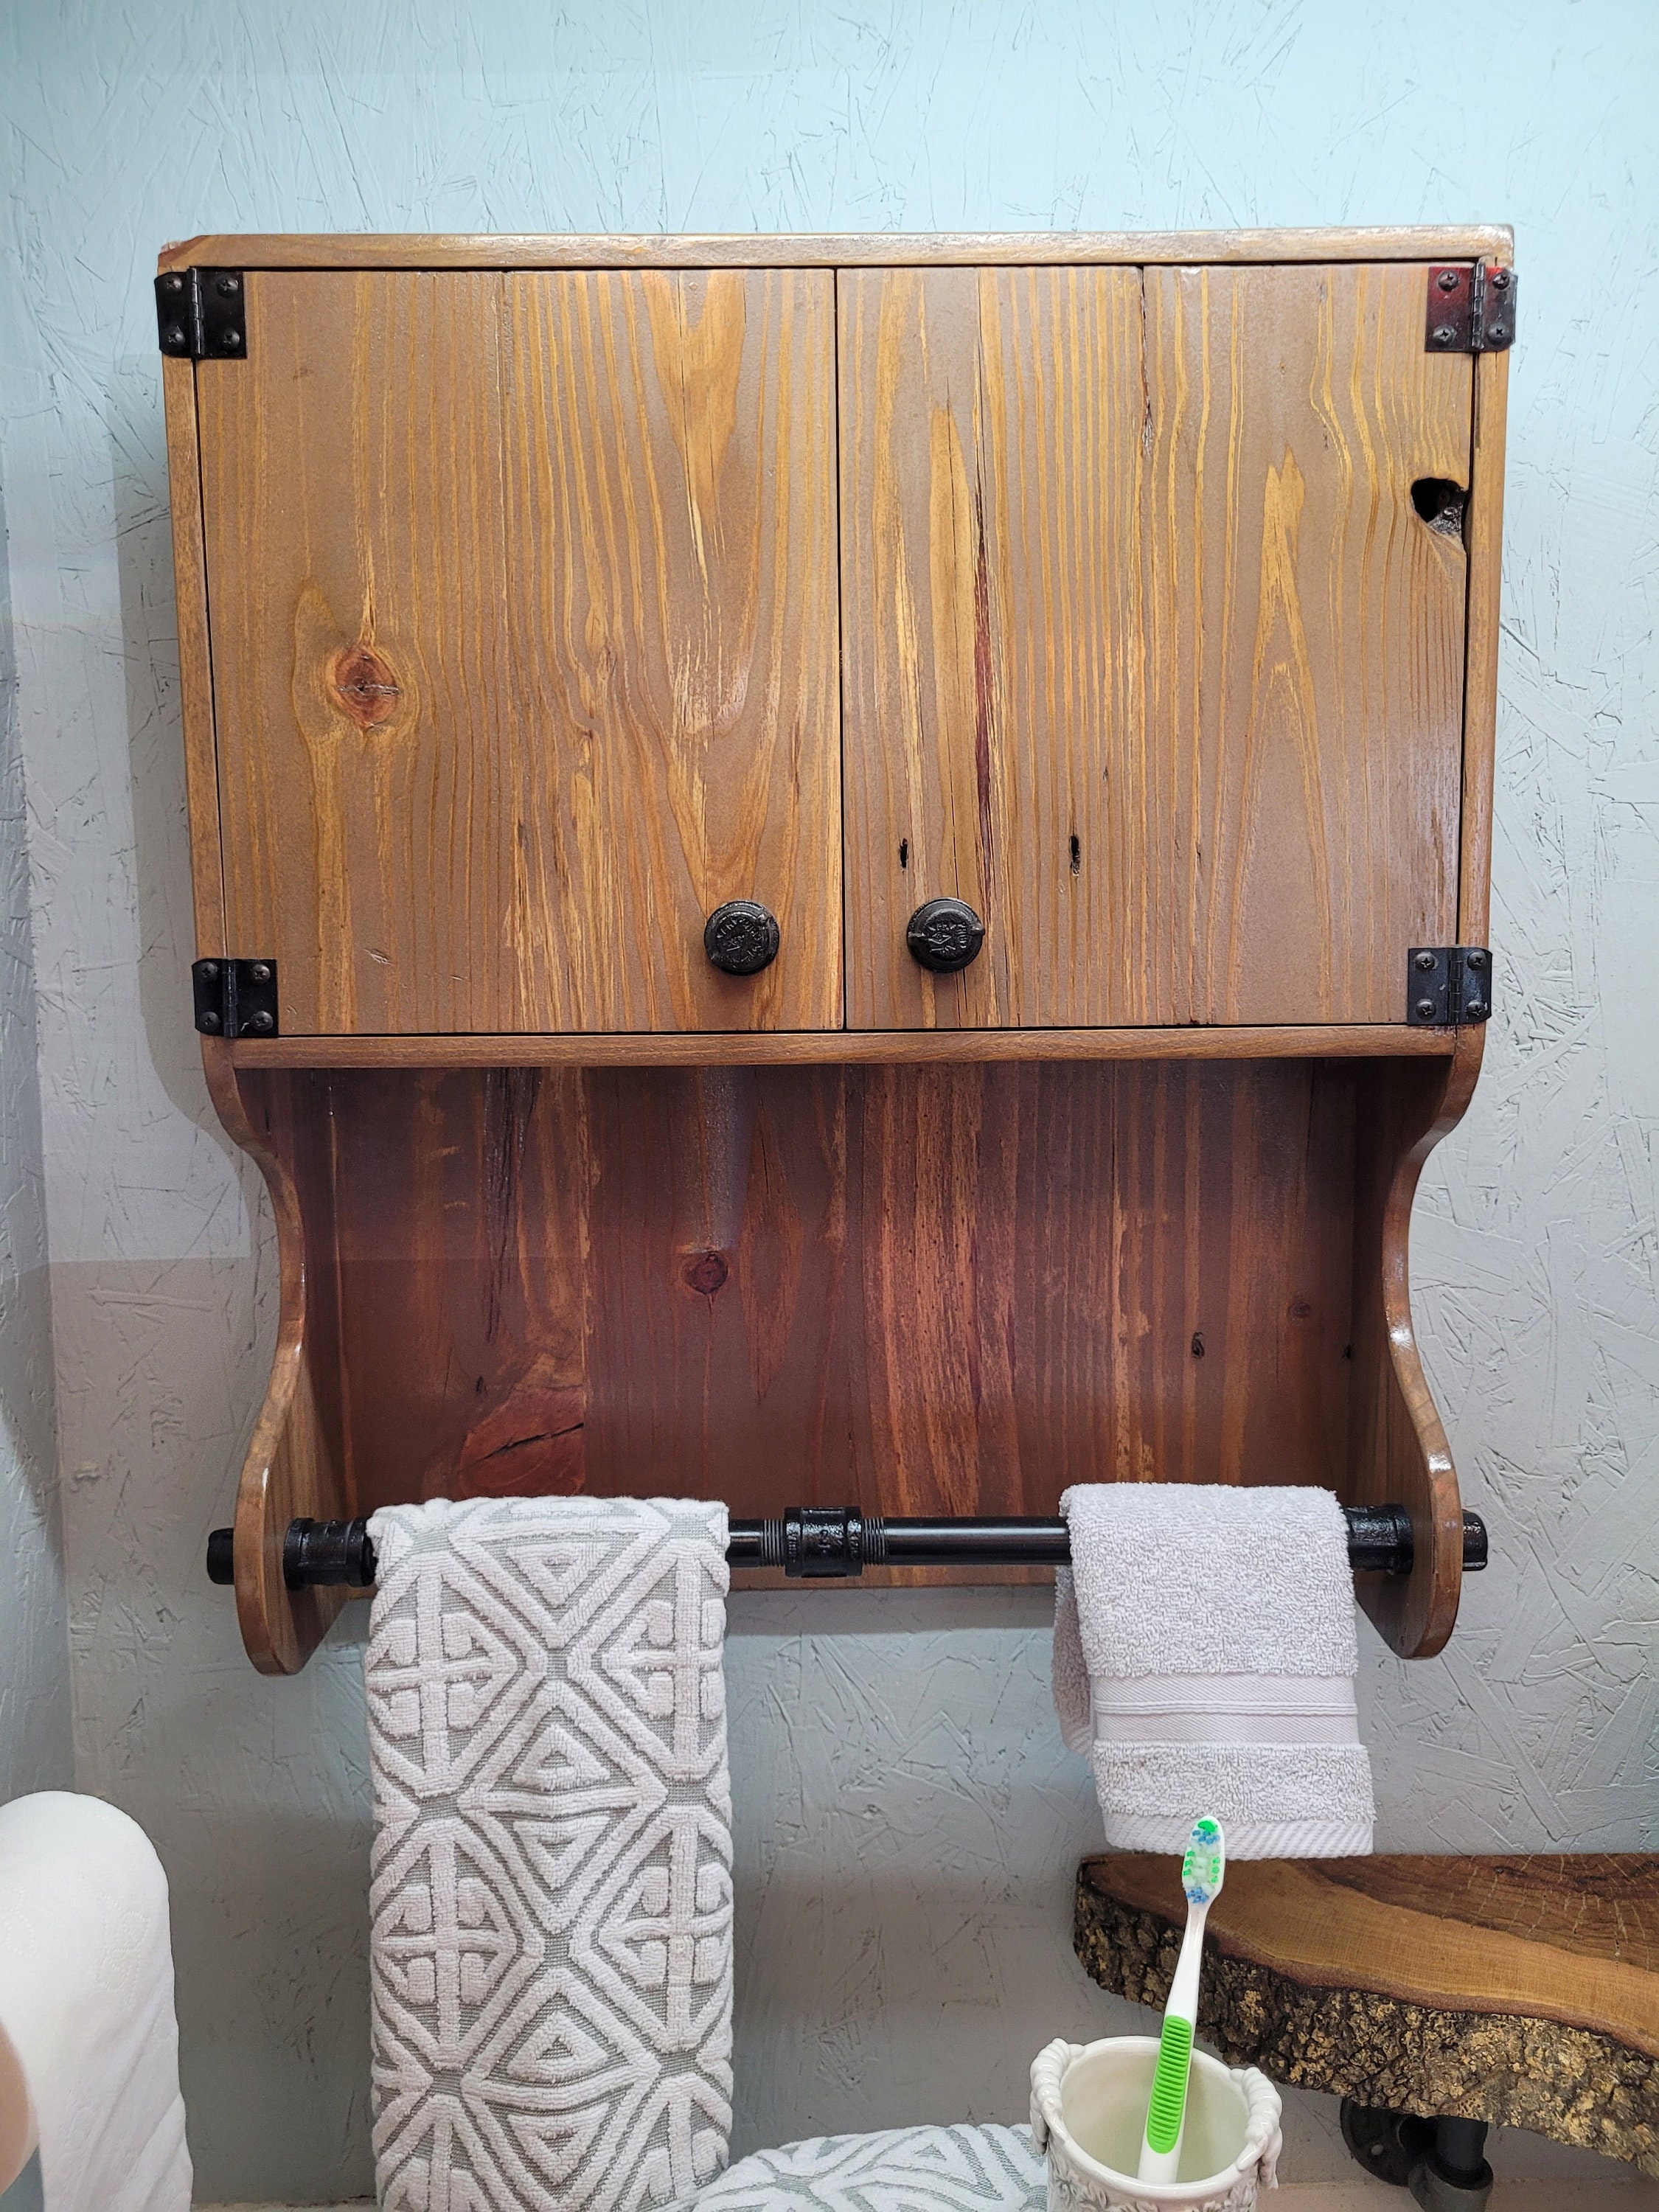 Bomutovy Kitchen Towel Holder Over Cabinet Door Hand Dish Towel Bar Rack Holders Stainless Steel Towel Rack Inside Cabinet Drawer for Bathroom and